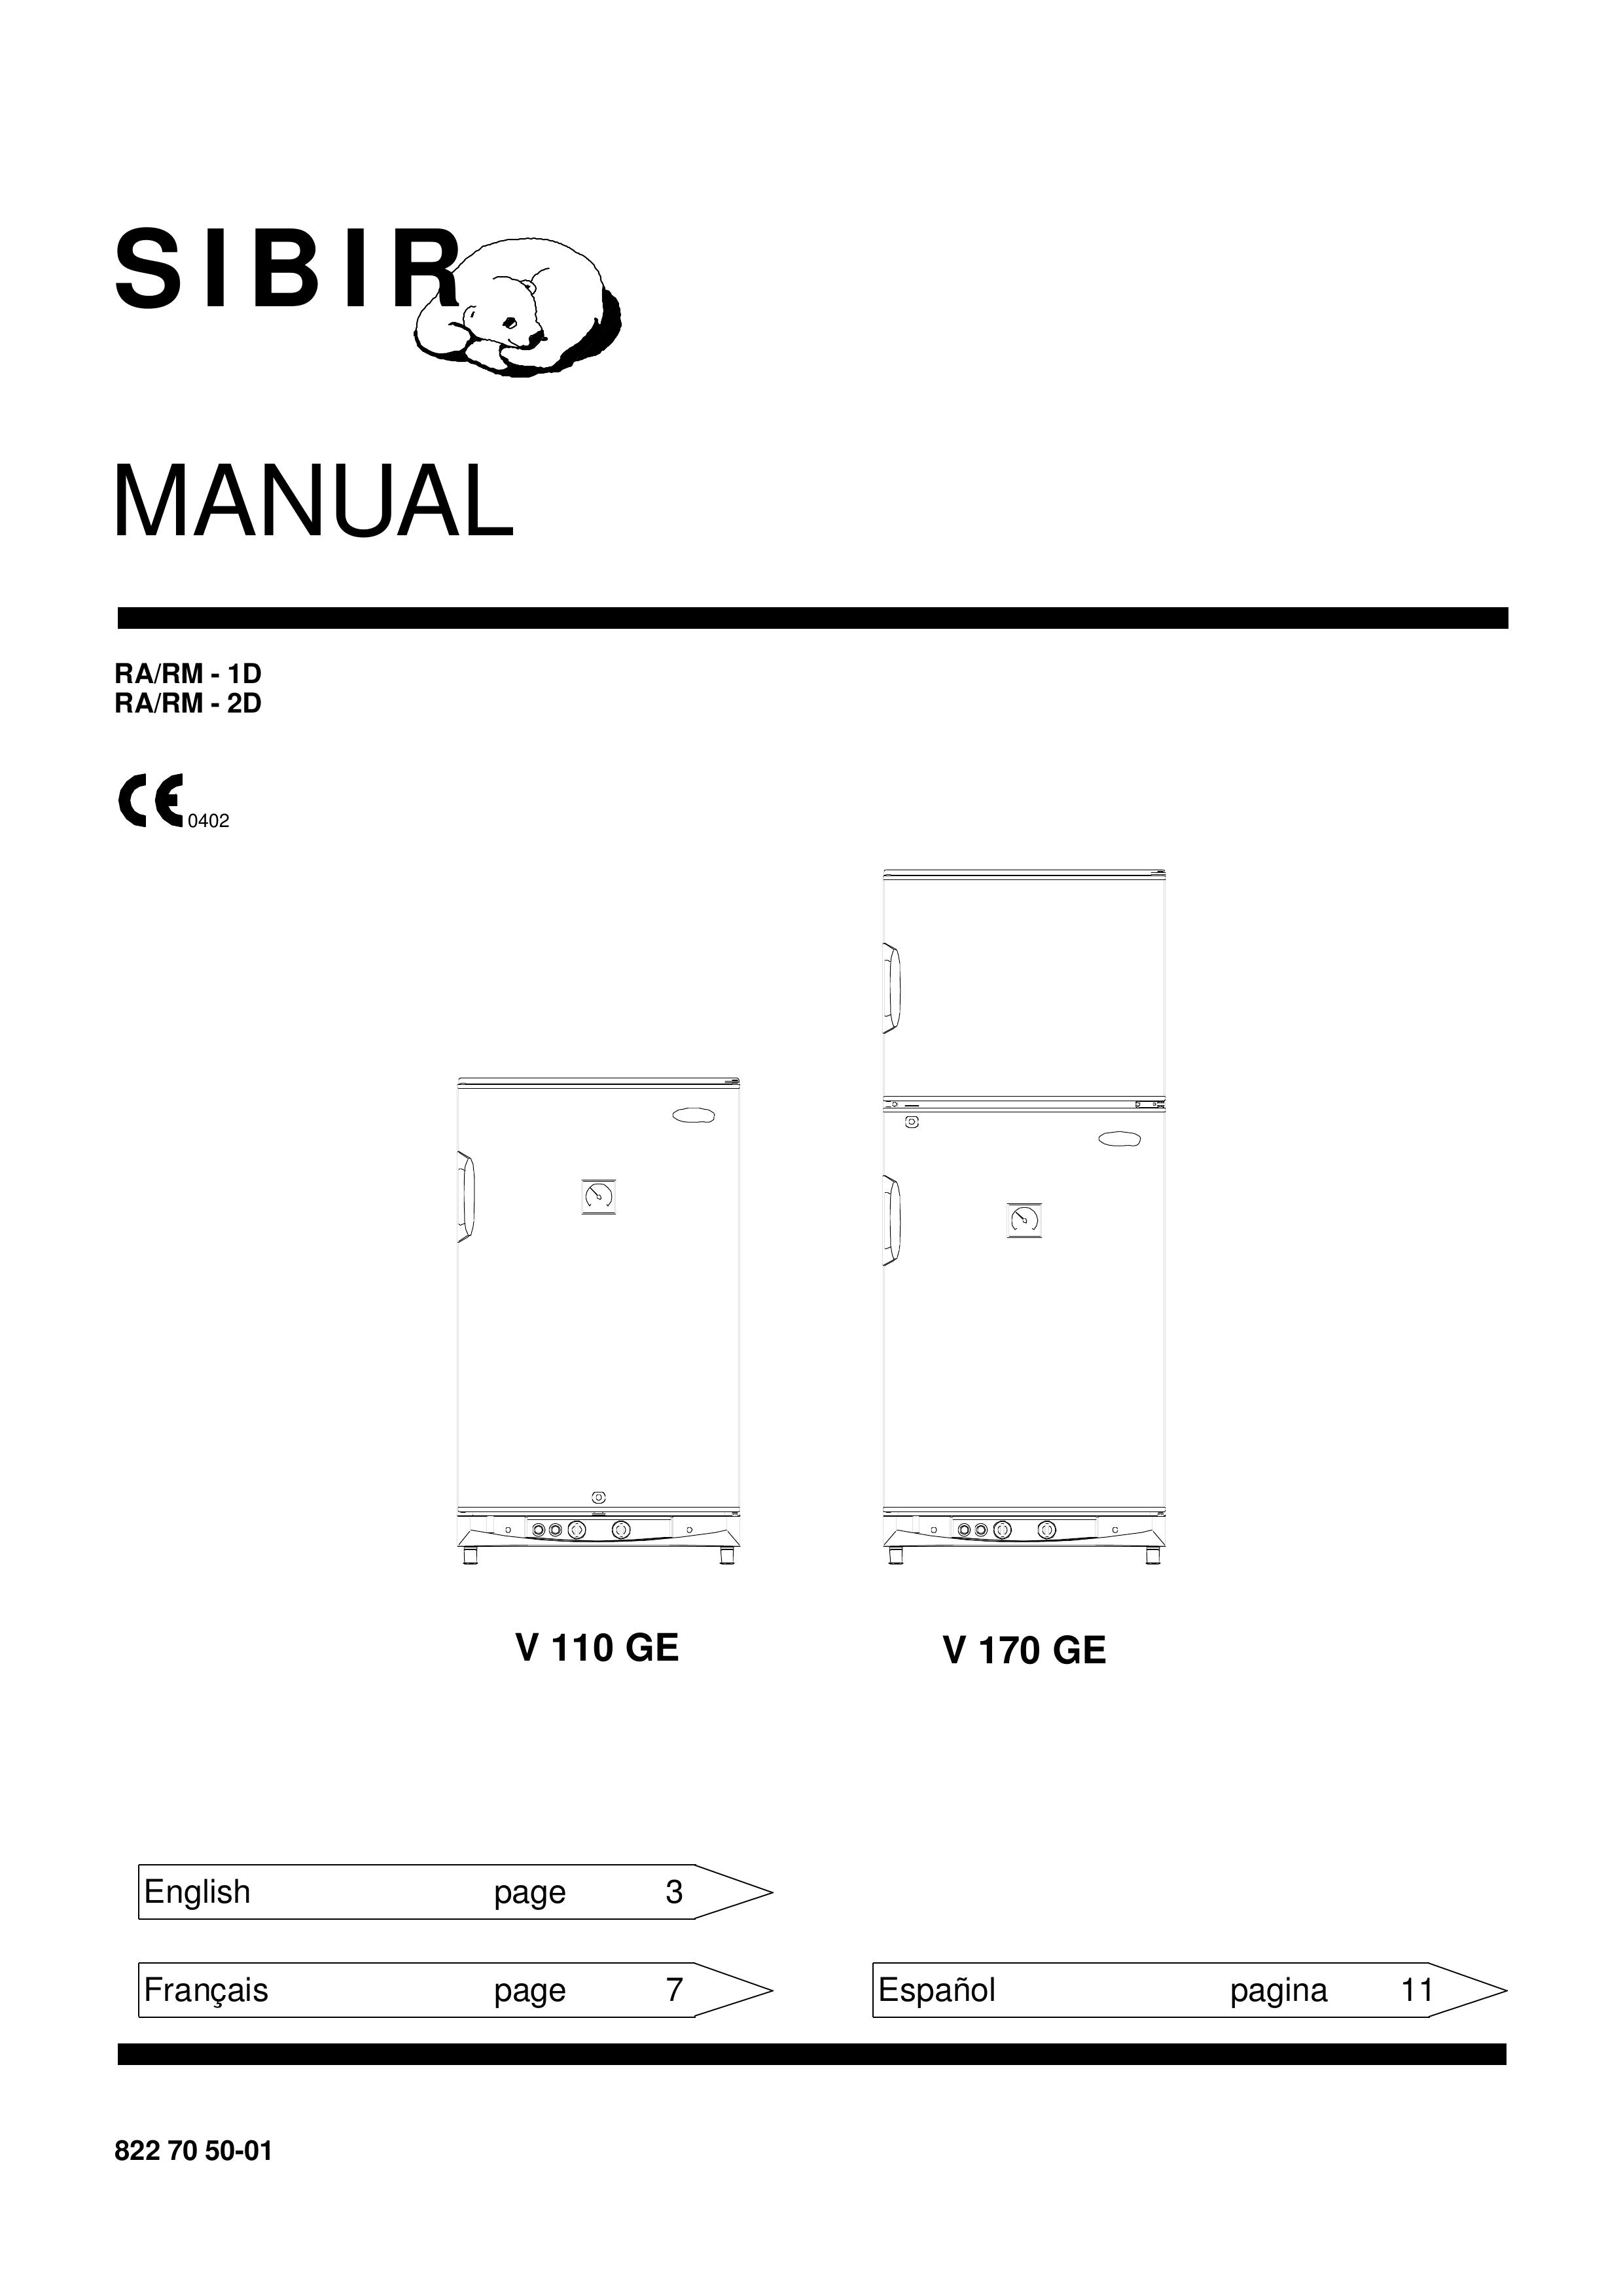 Sibir Optics V 170 GE Refrigerator User Manual